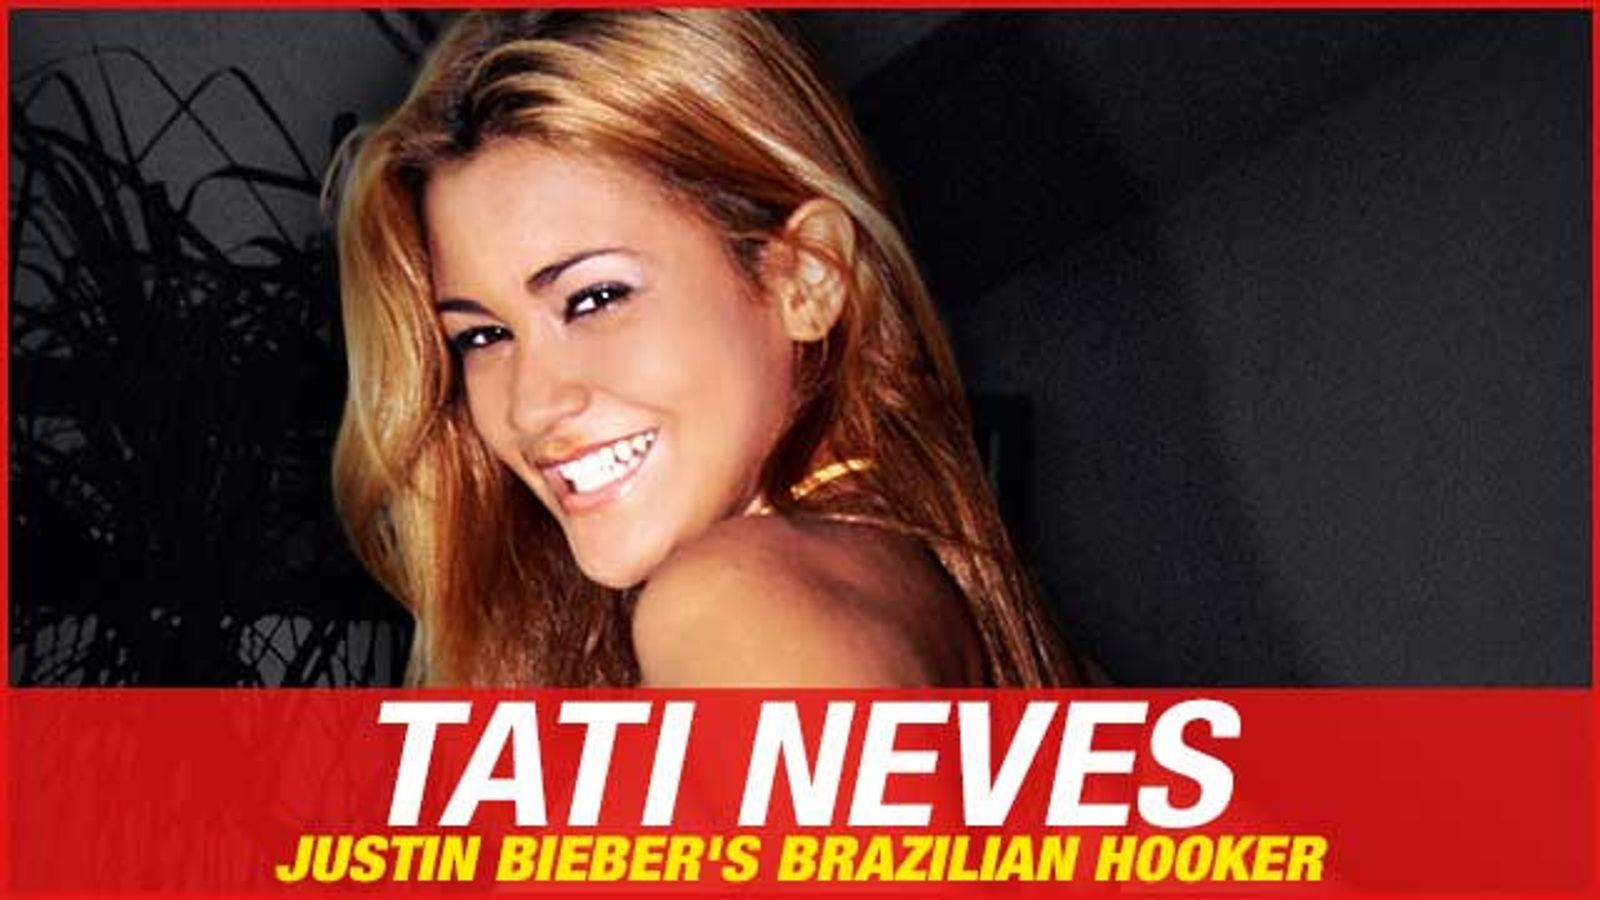 Justin Bieber's 'Friend' Tati Neves featured on SilverstoneDVD.com